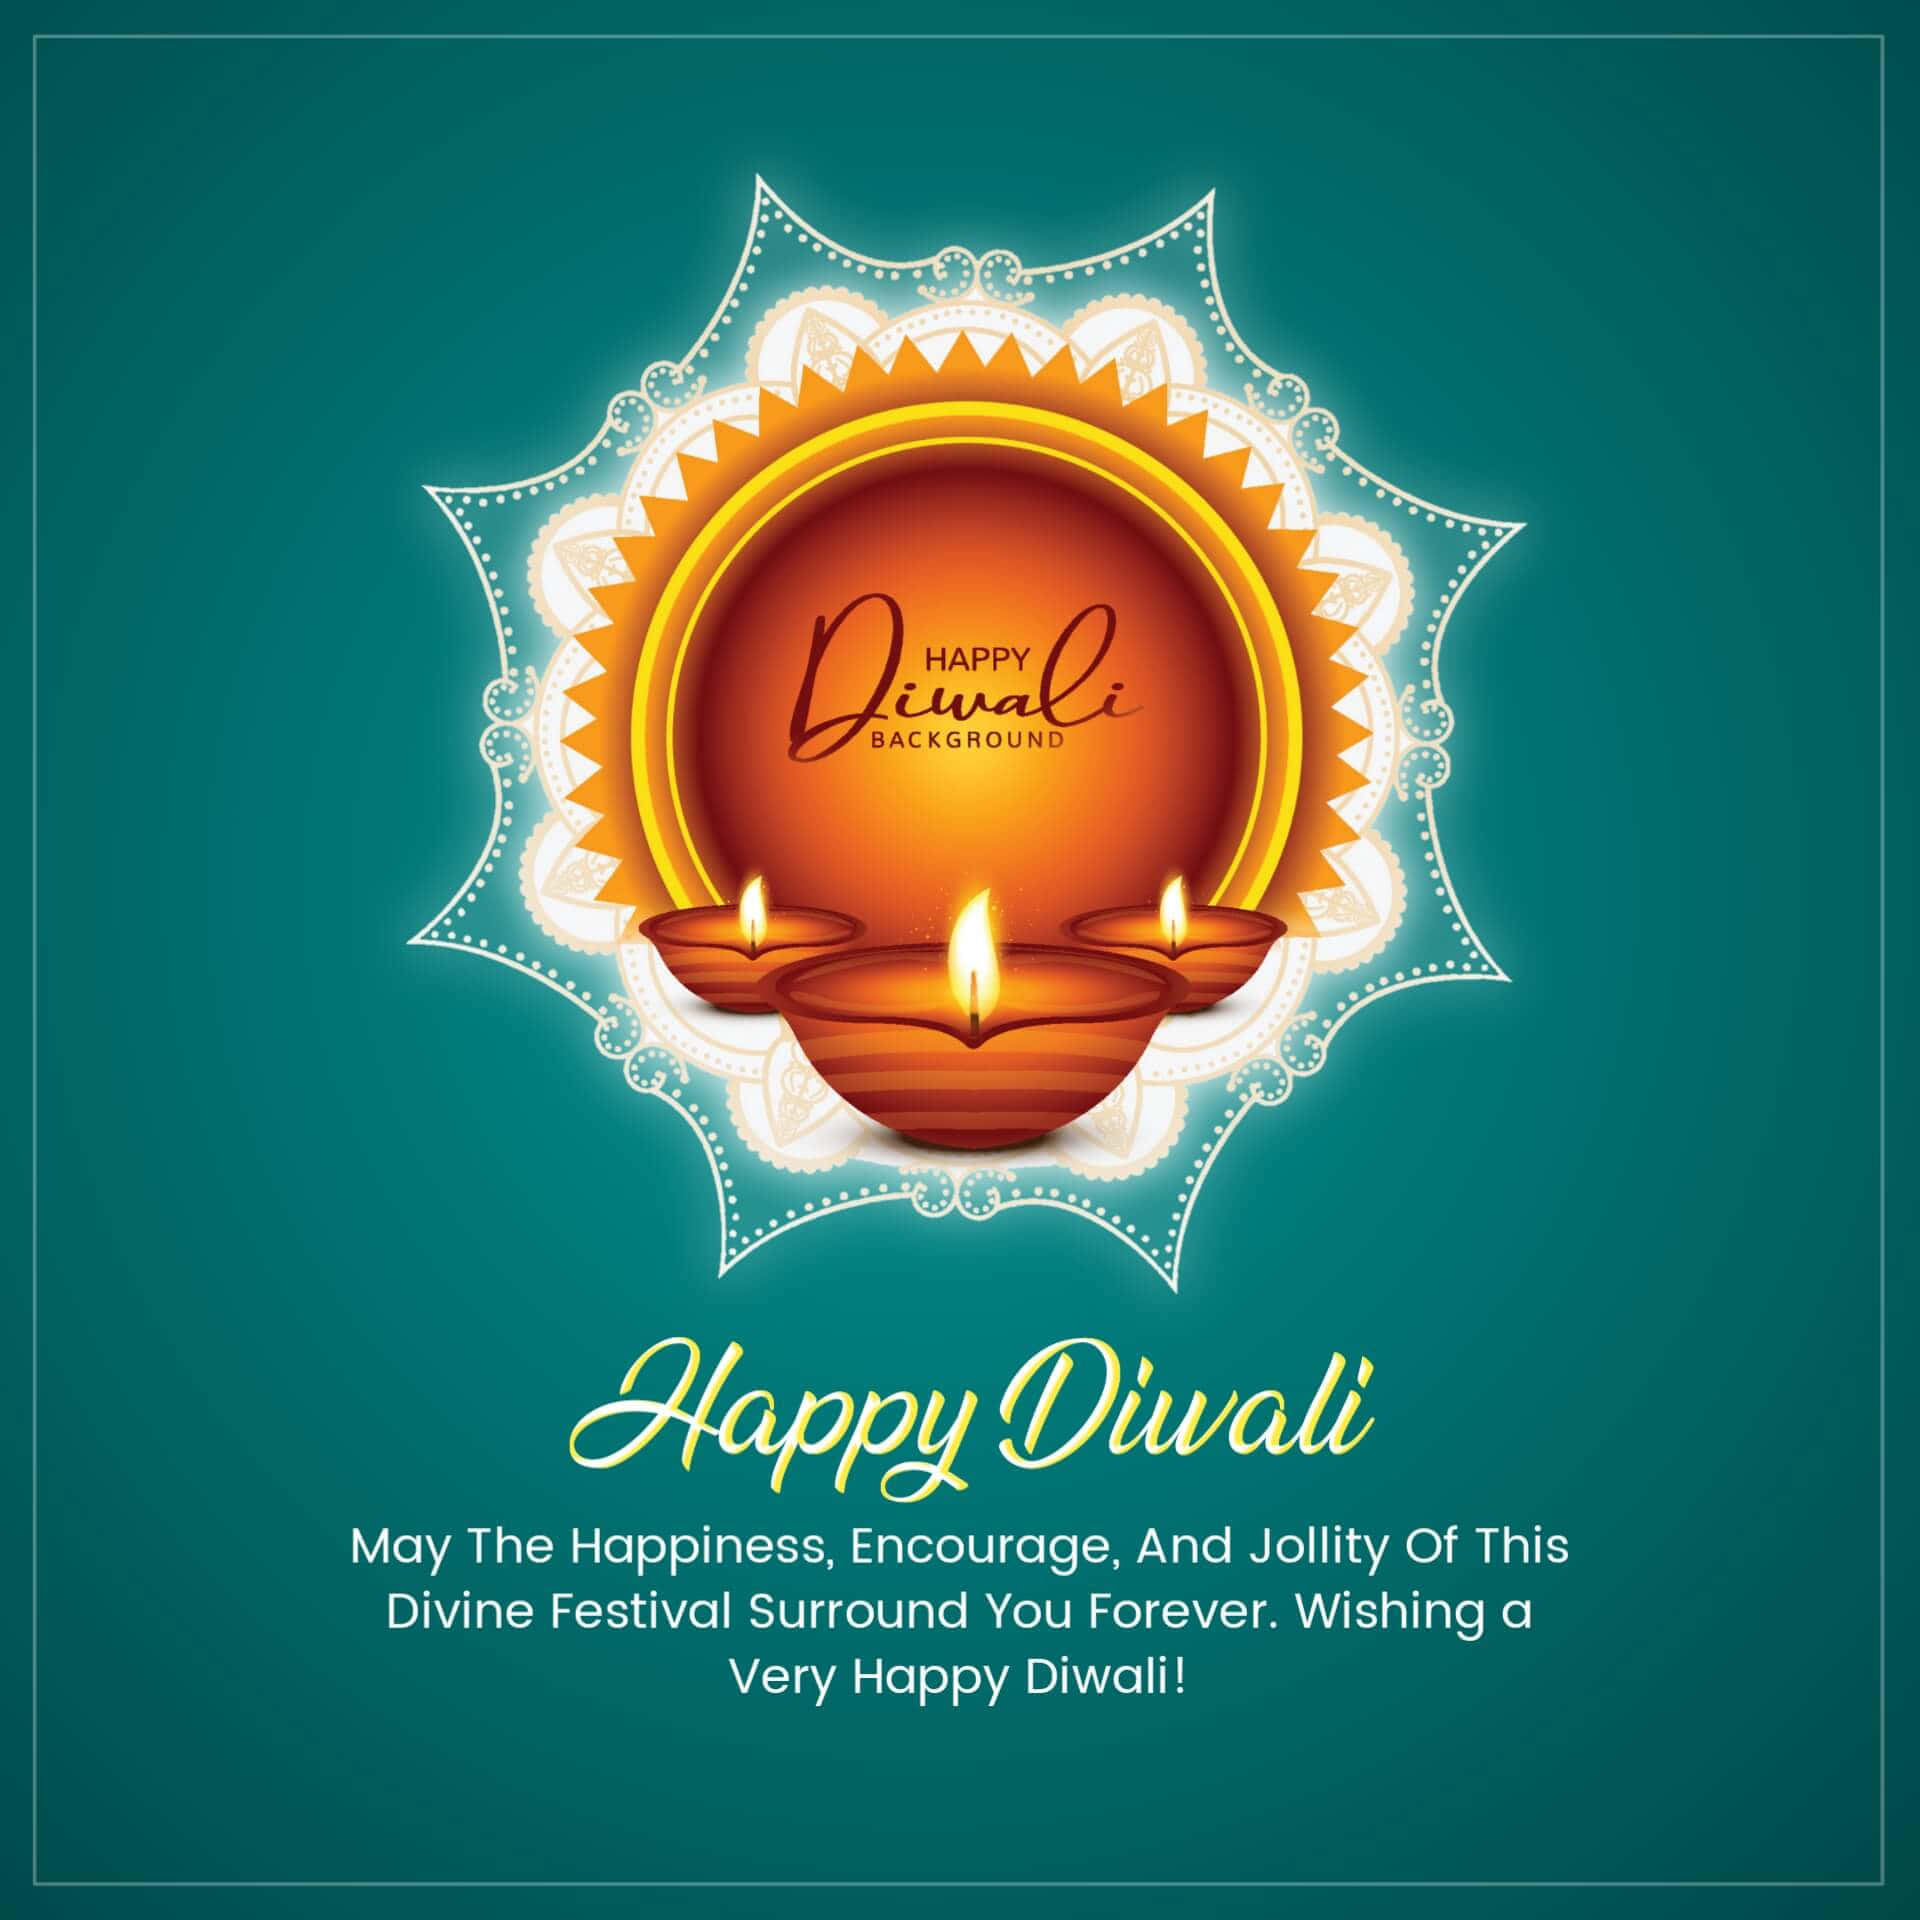 Happy Diwali - Celebrating the Festival of Lights